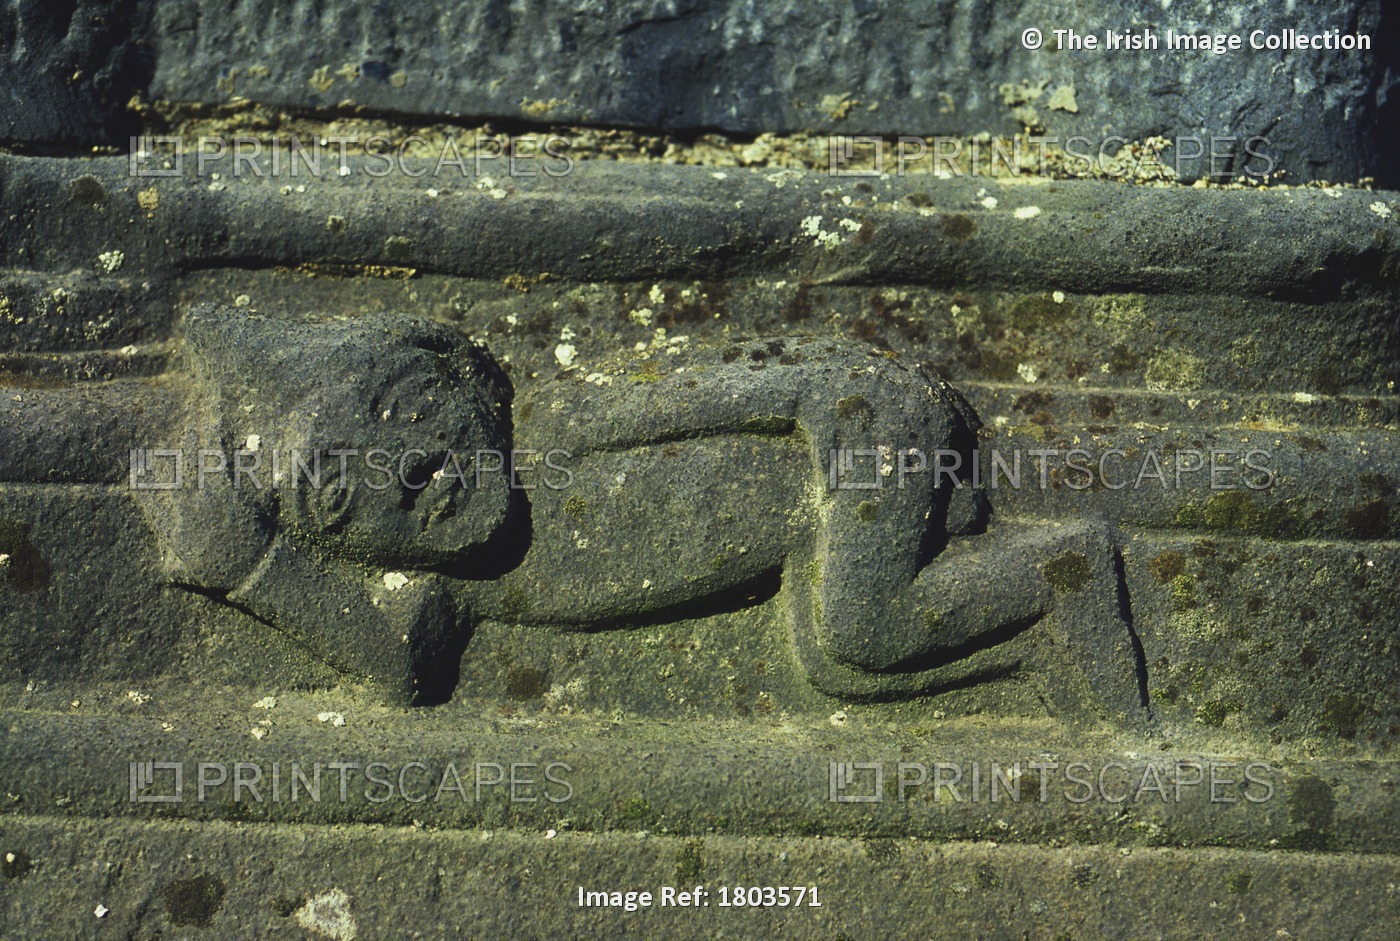 Stone Carving, Jerpoint Abbey, Co Kilkenny, Ireland